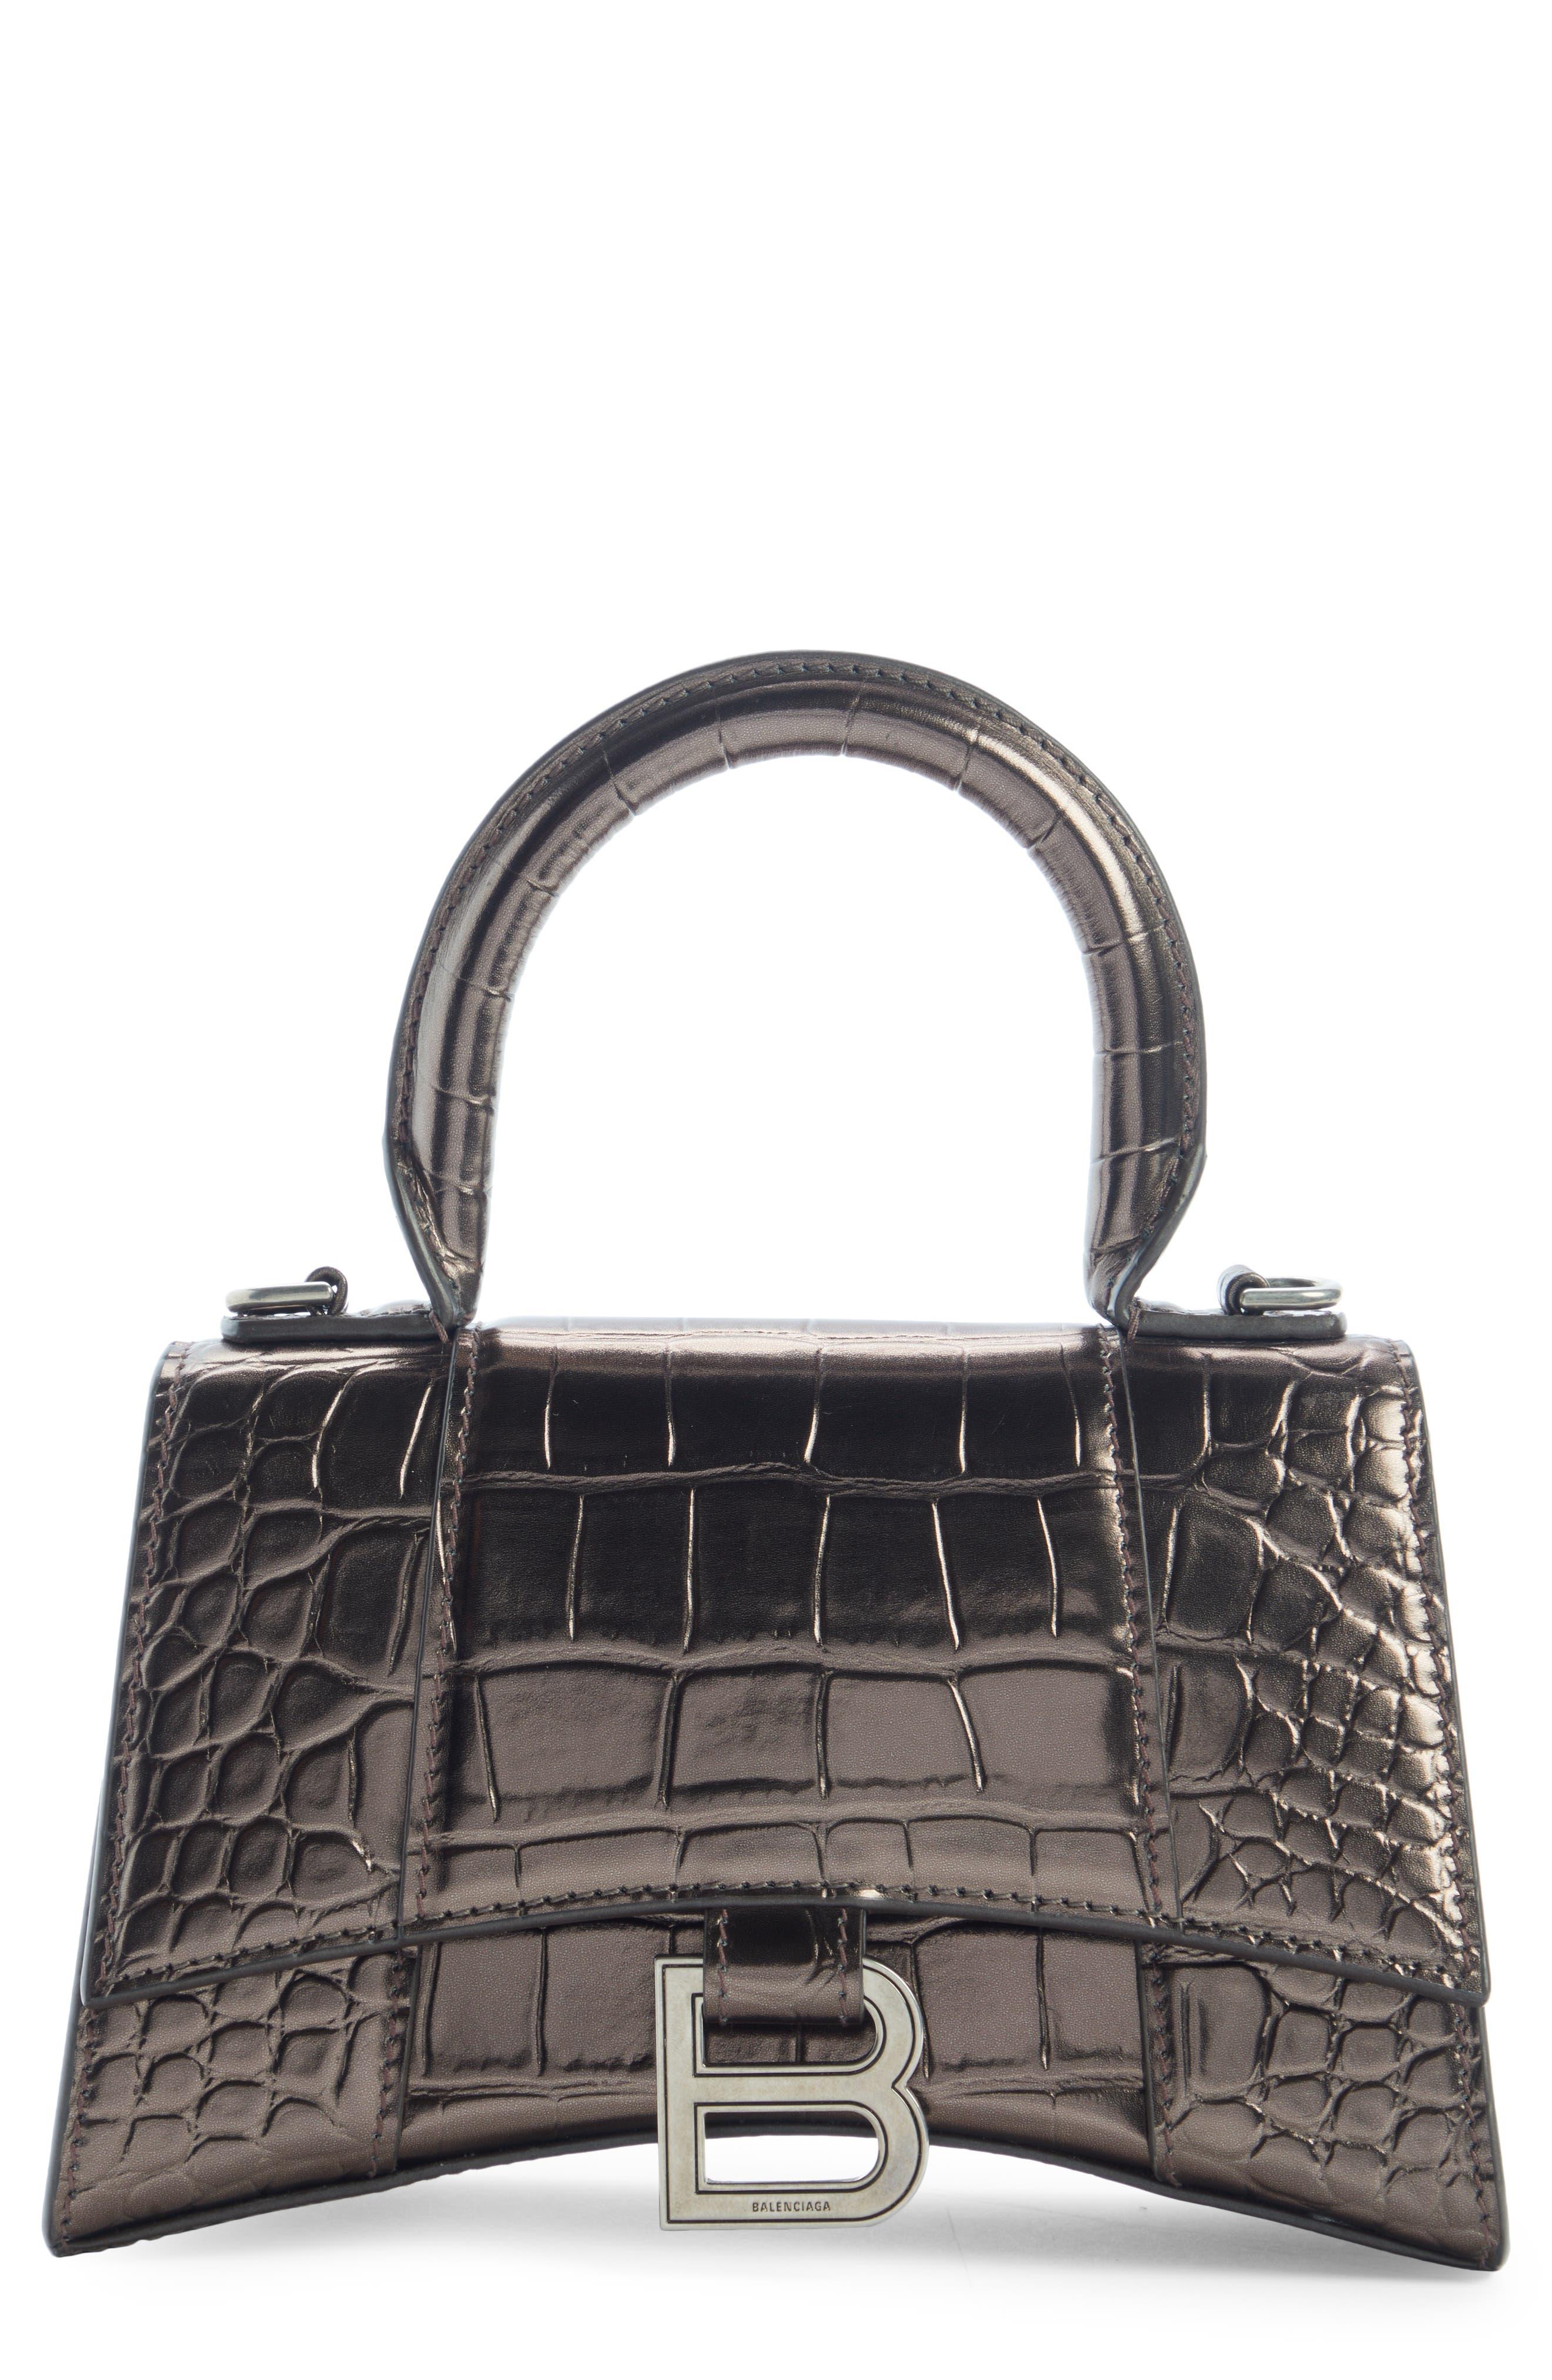 NEW Balenciaga Women's XS Hourglass Croc-Embossed Leather Top